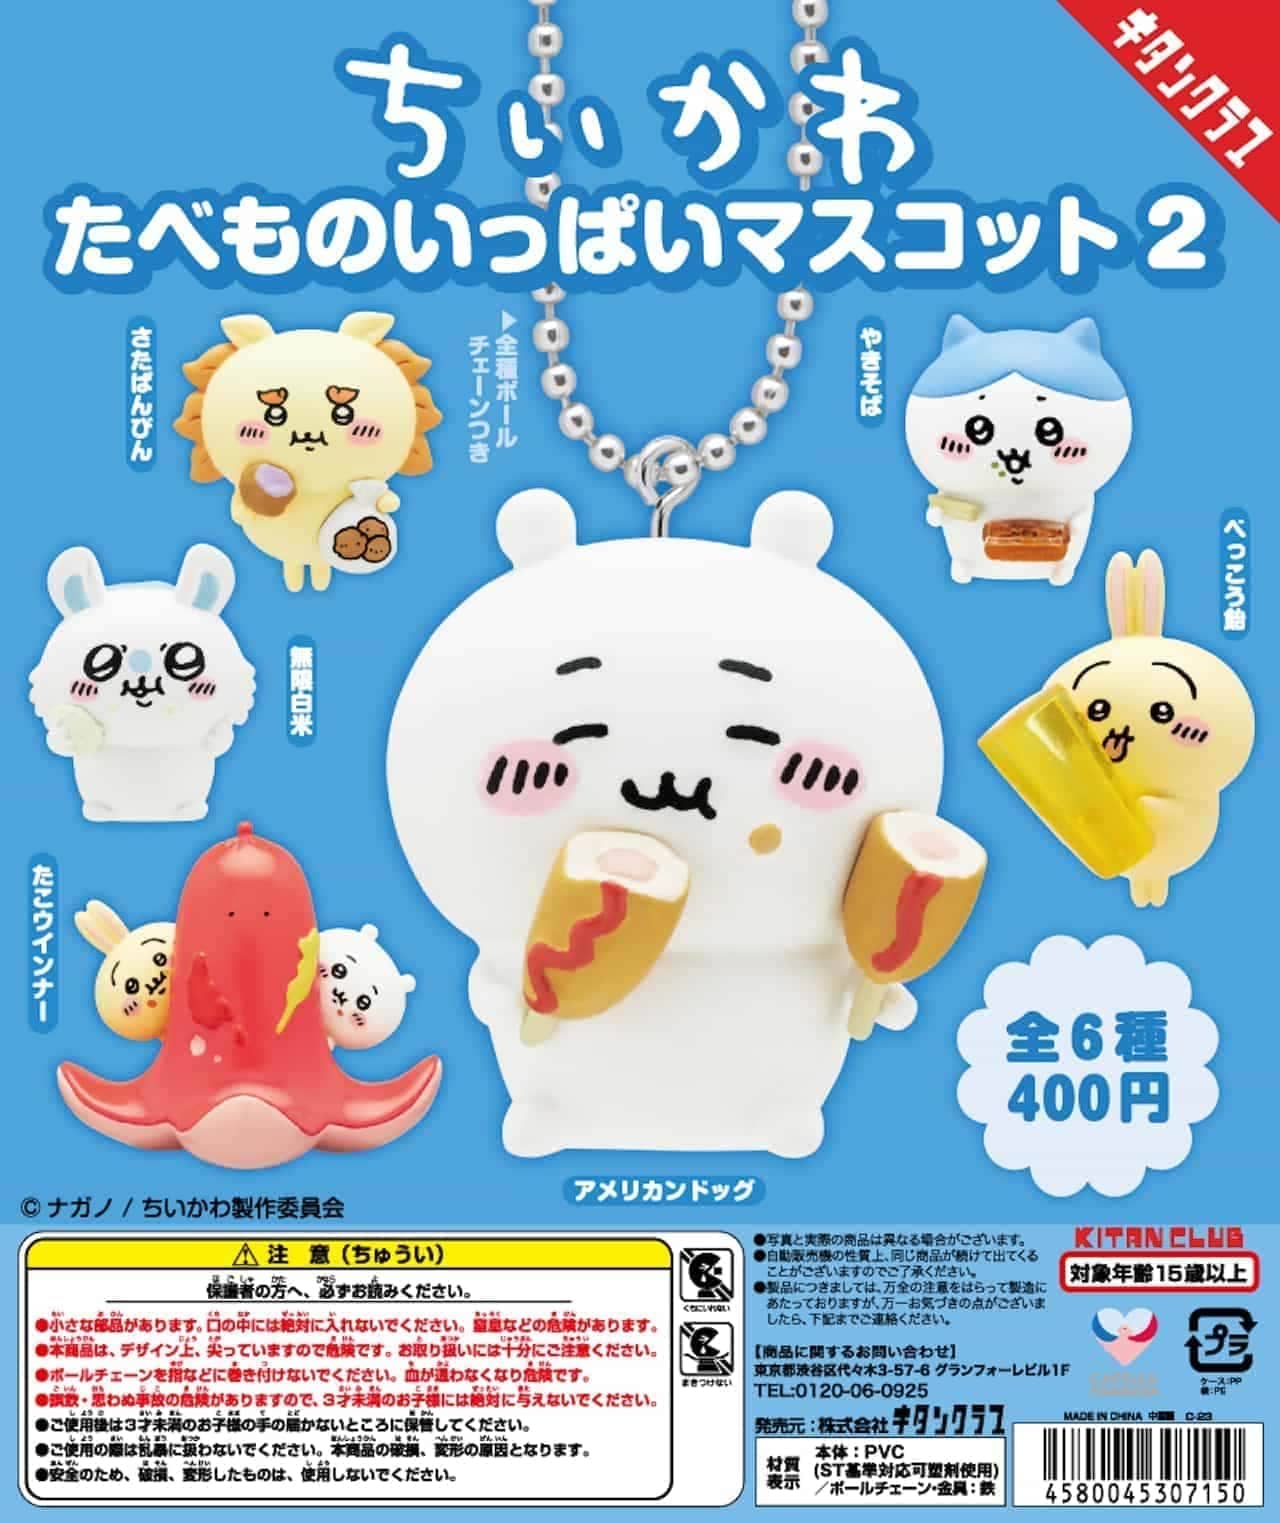 Kitanklab "Chiikawa Tamimono Filled Mascot 2" (Japanese only)